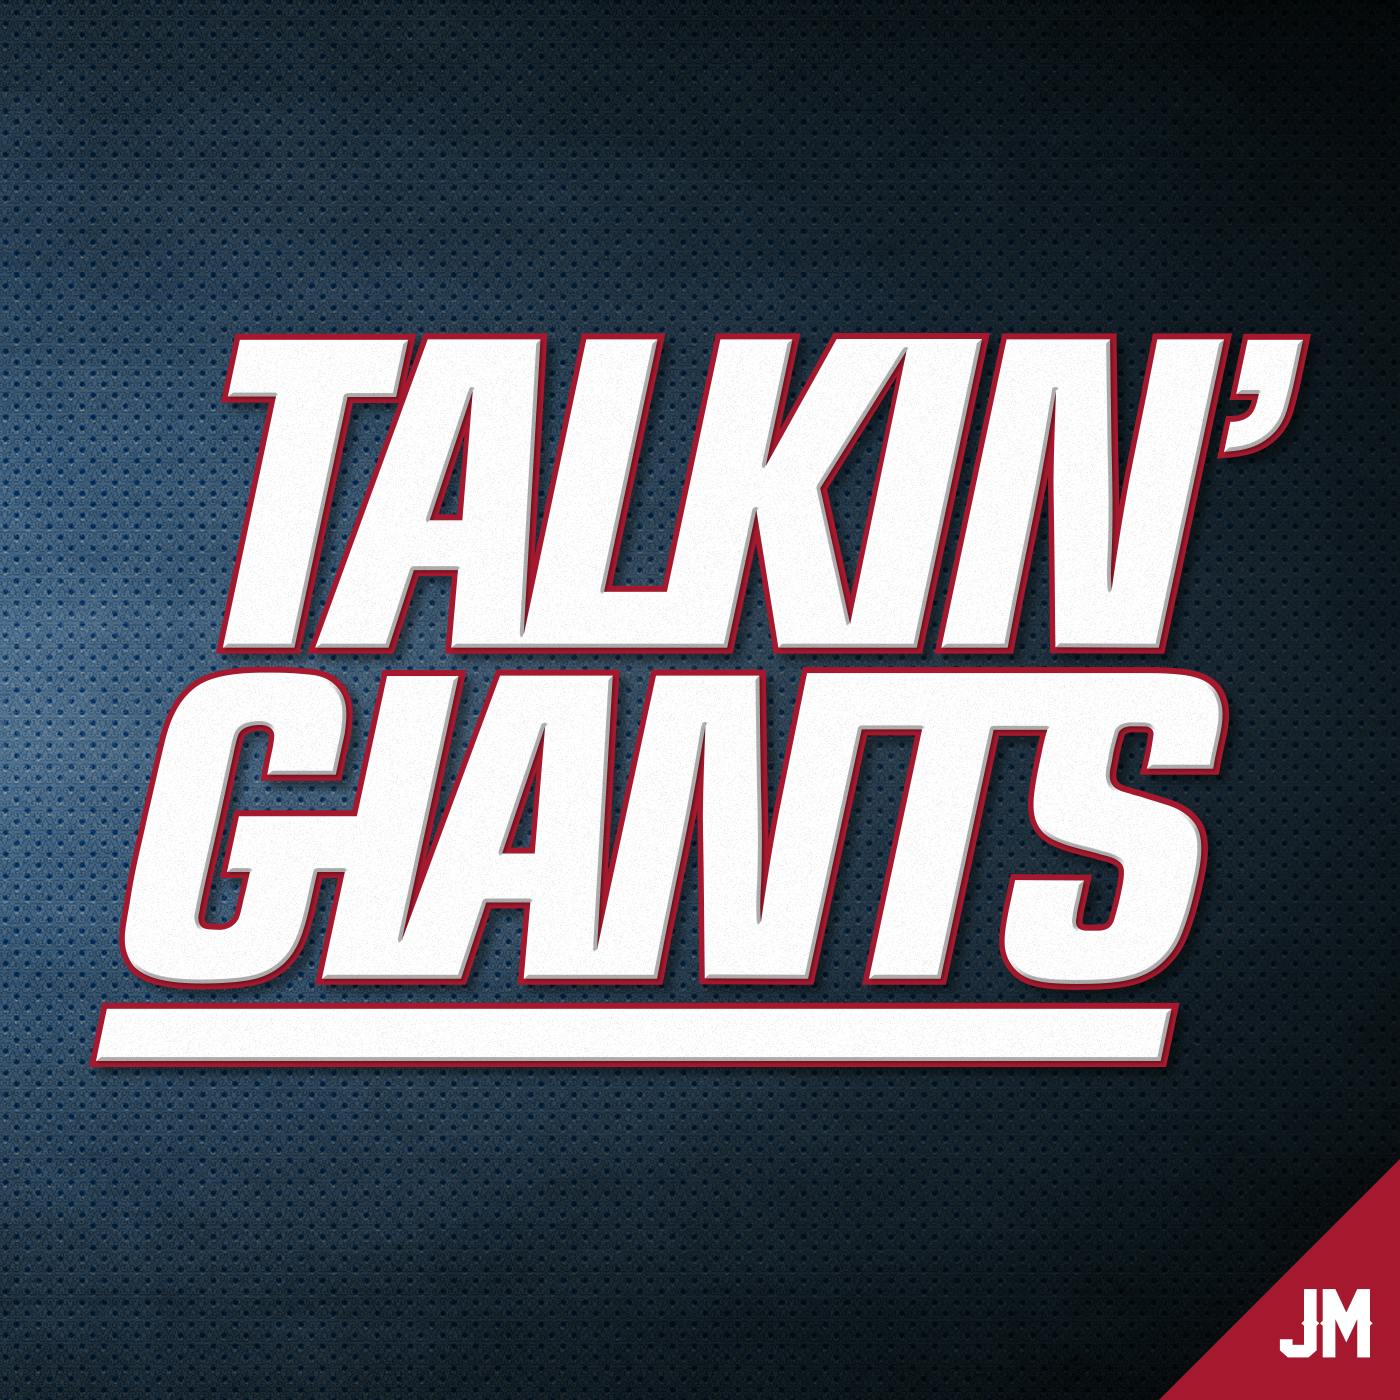 494 | Giants-Cowboys Preview Week 3